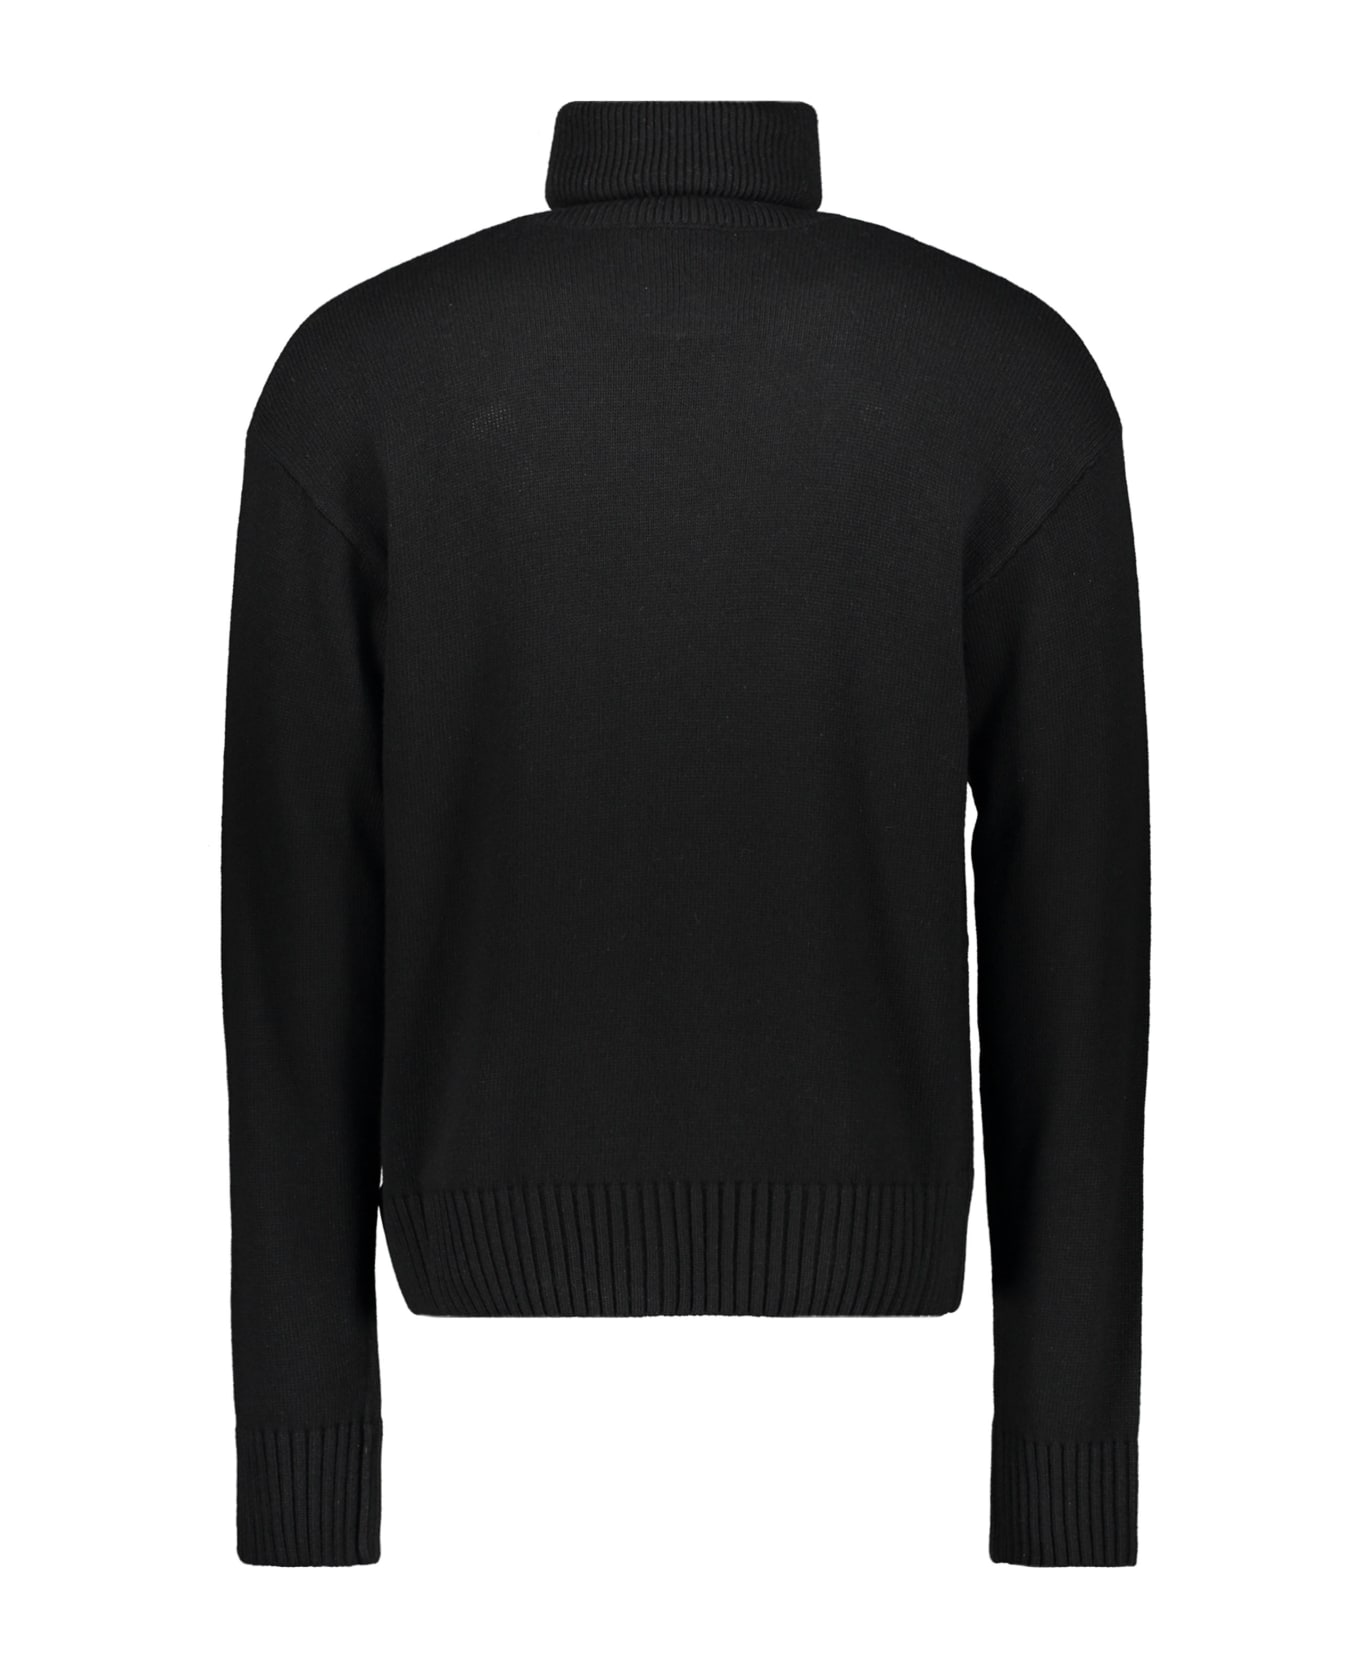 Off-White Turtleneck Sweater - black